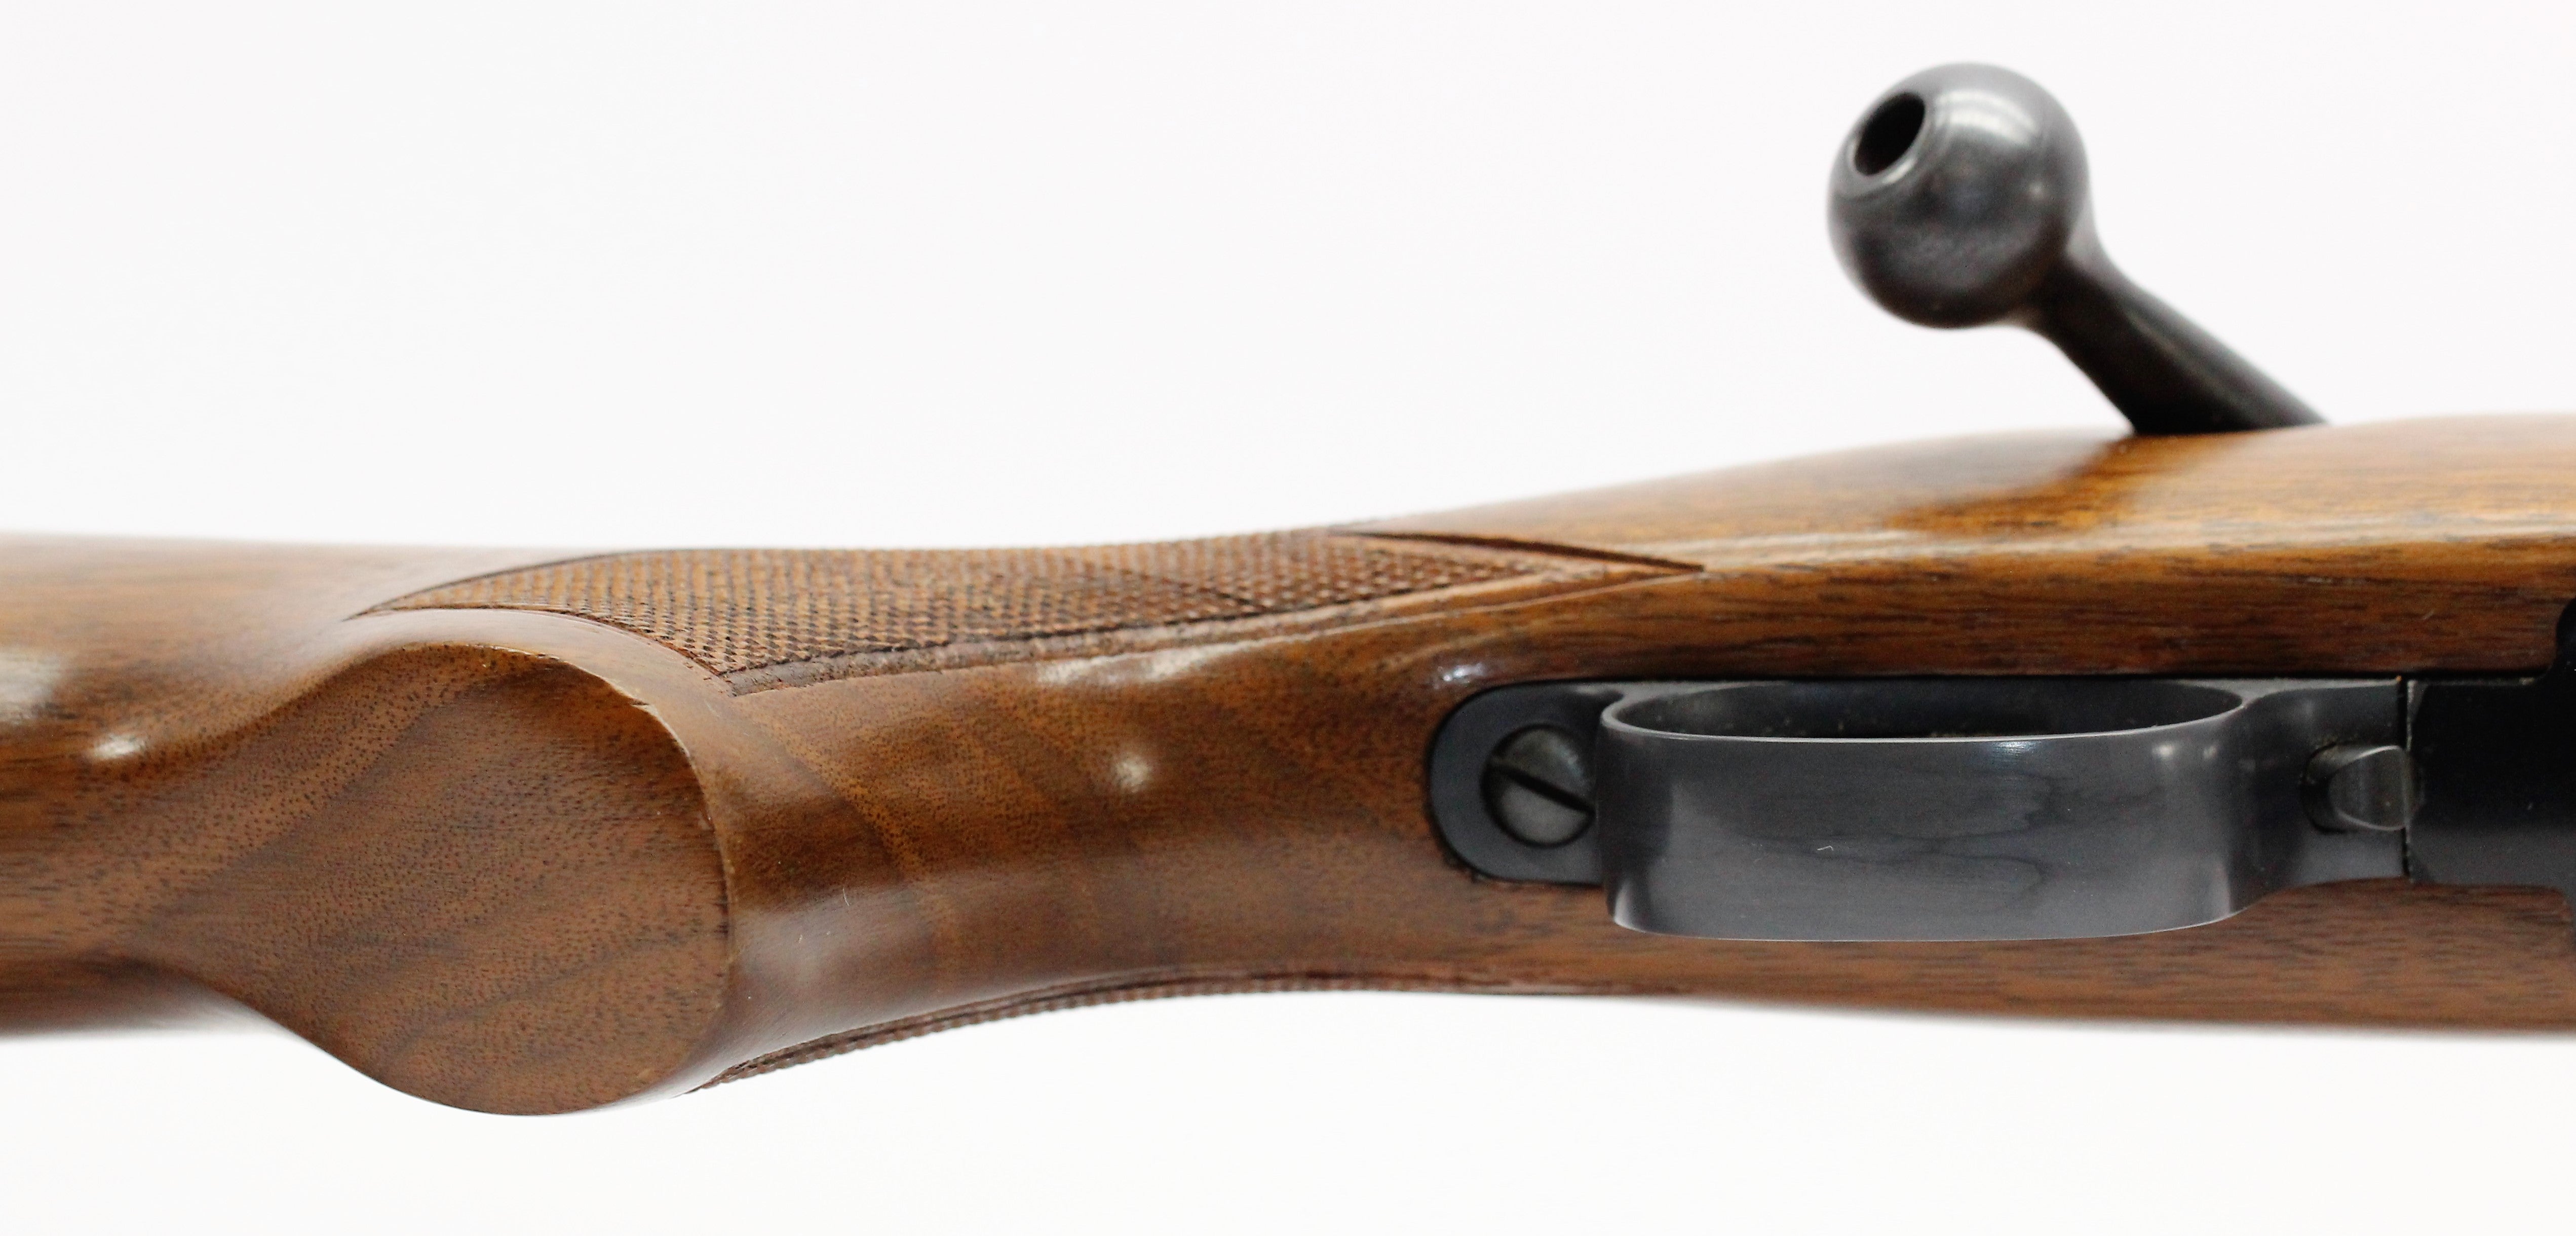 .270 Win Featherweight Rifle - 1957